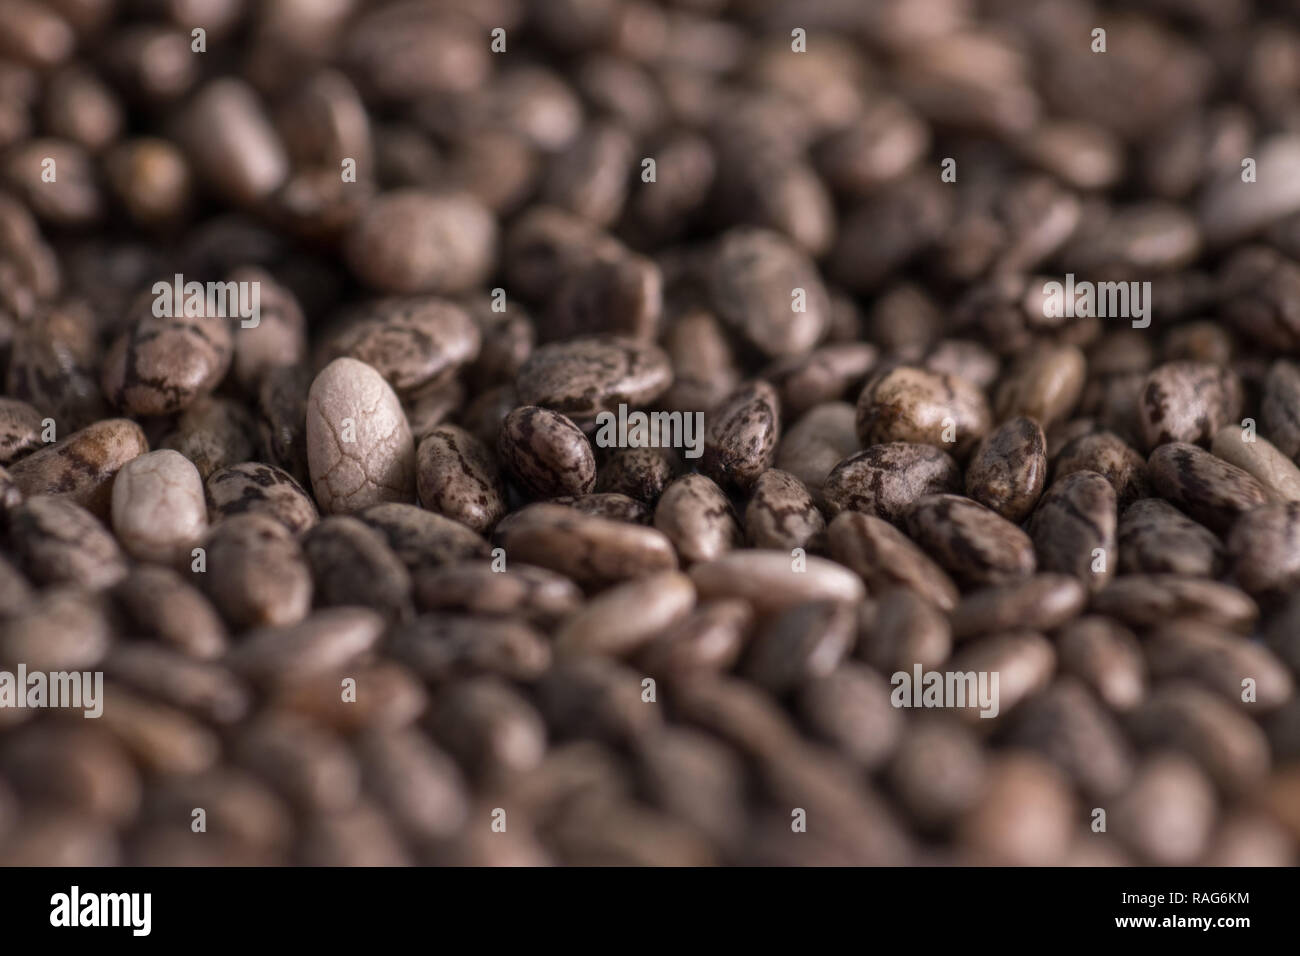 Les graines de quinoa dans la close up Banque D'Images